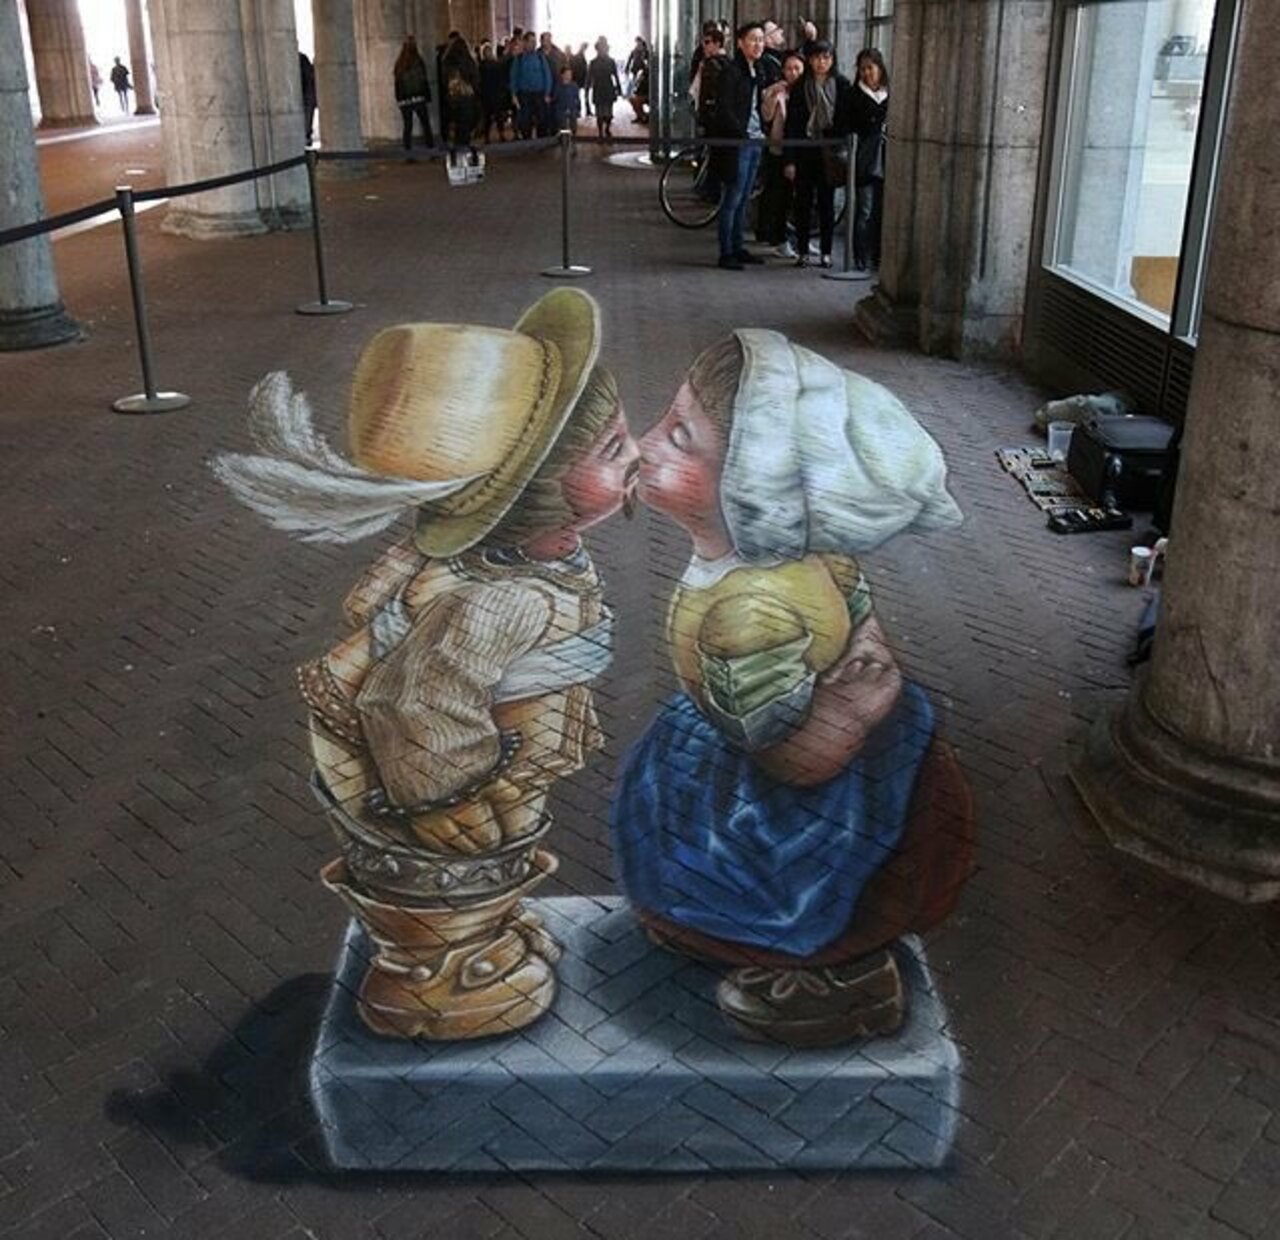 RT bkedc Vermeer & Rembrandt meets Anamorphic 3D Street Art by Leon Keer 

#art #mural #graffiti #streetart https://t.co/17hjiBdiWs